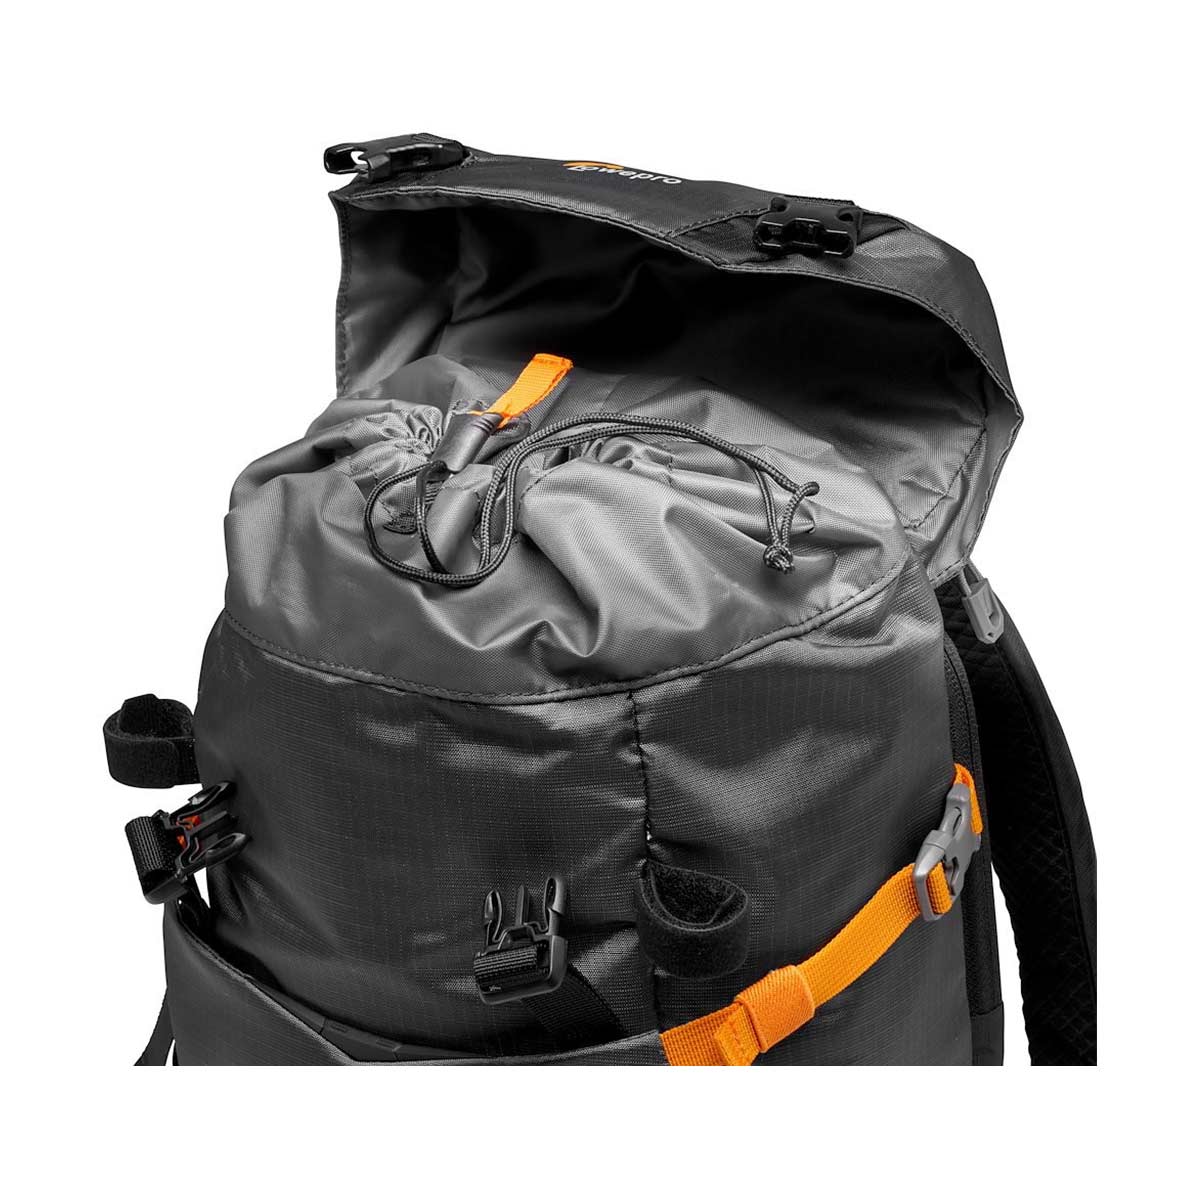 Lowepro PhotoSport Backpack BP 15L AW III (Black/Gray)